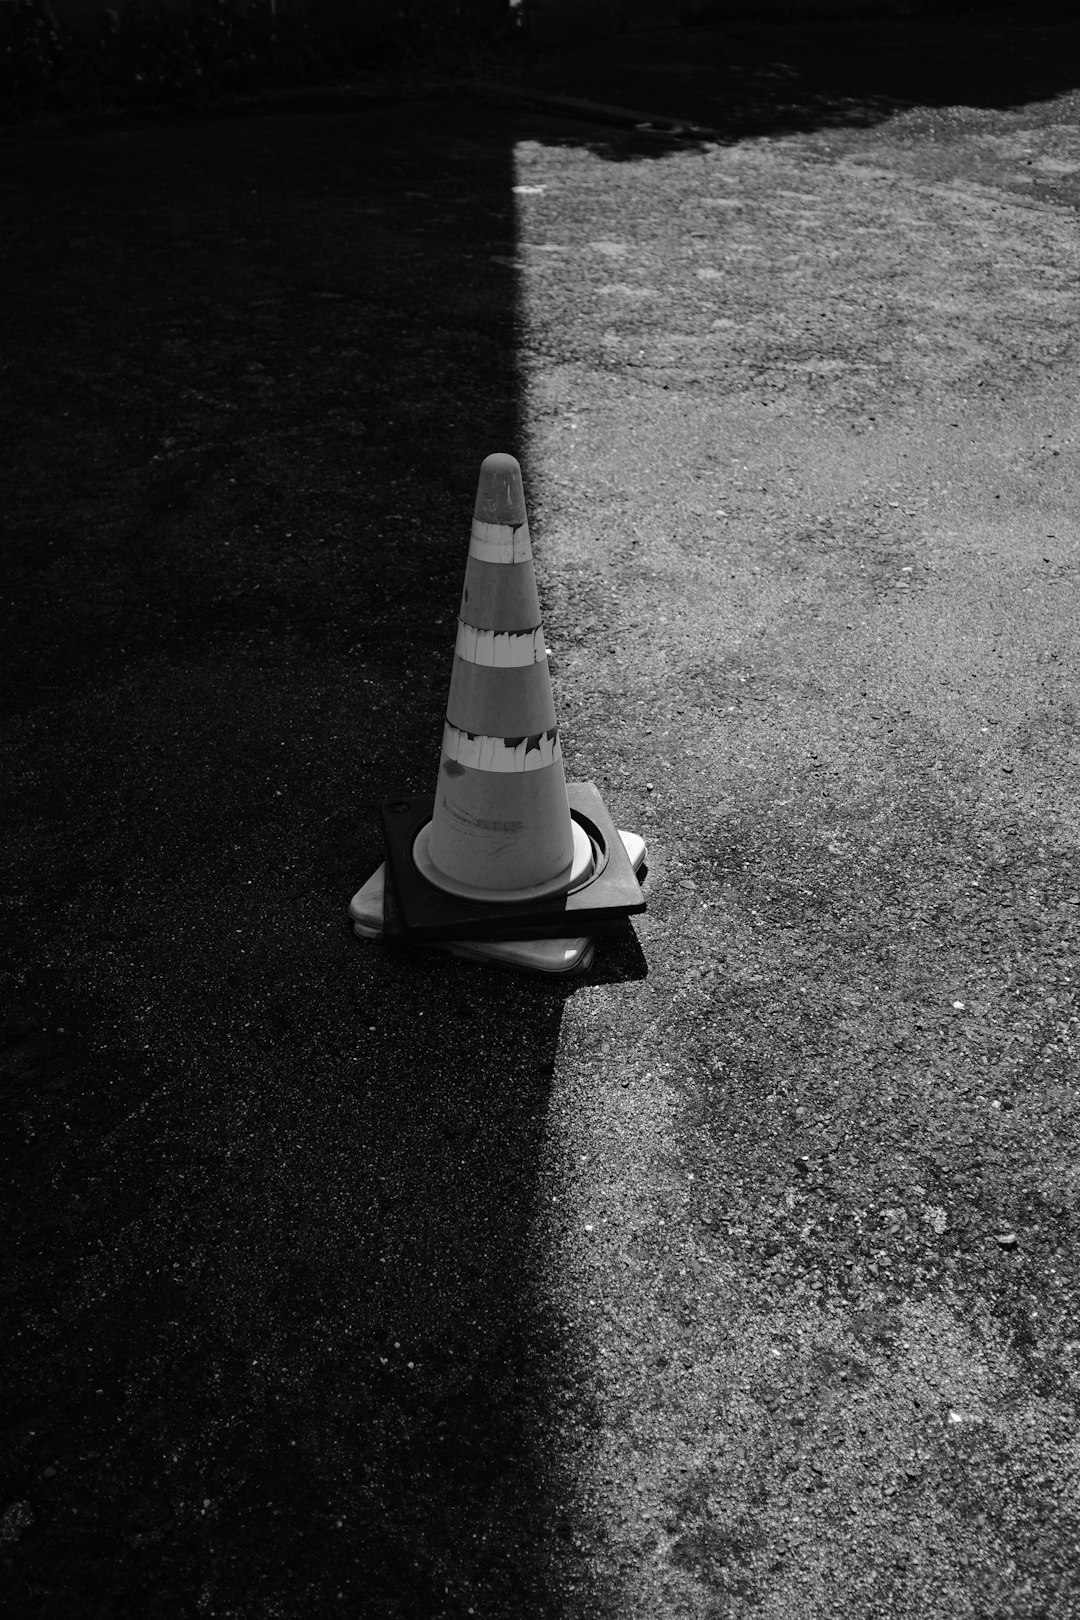 white and black striped traffic cone on black asphalt road